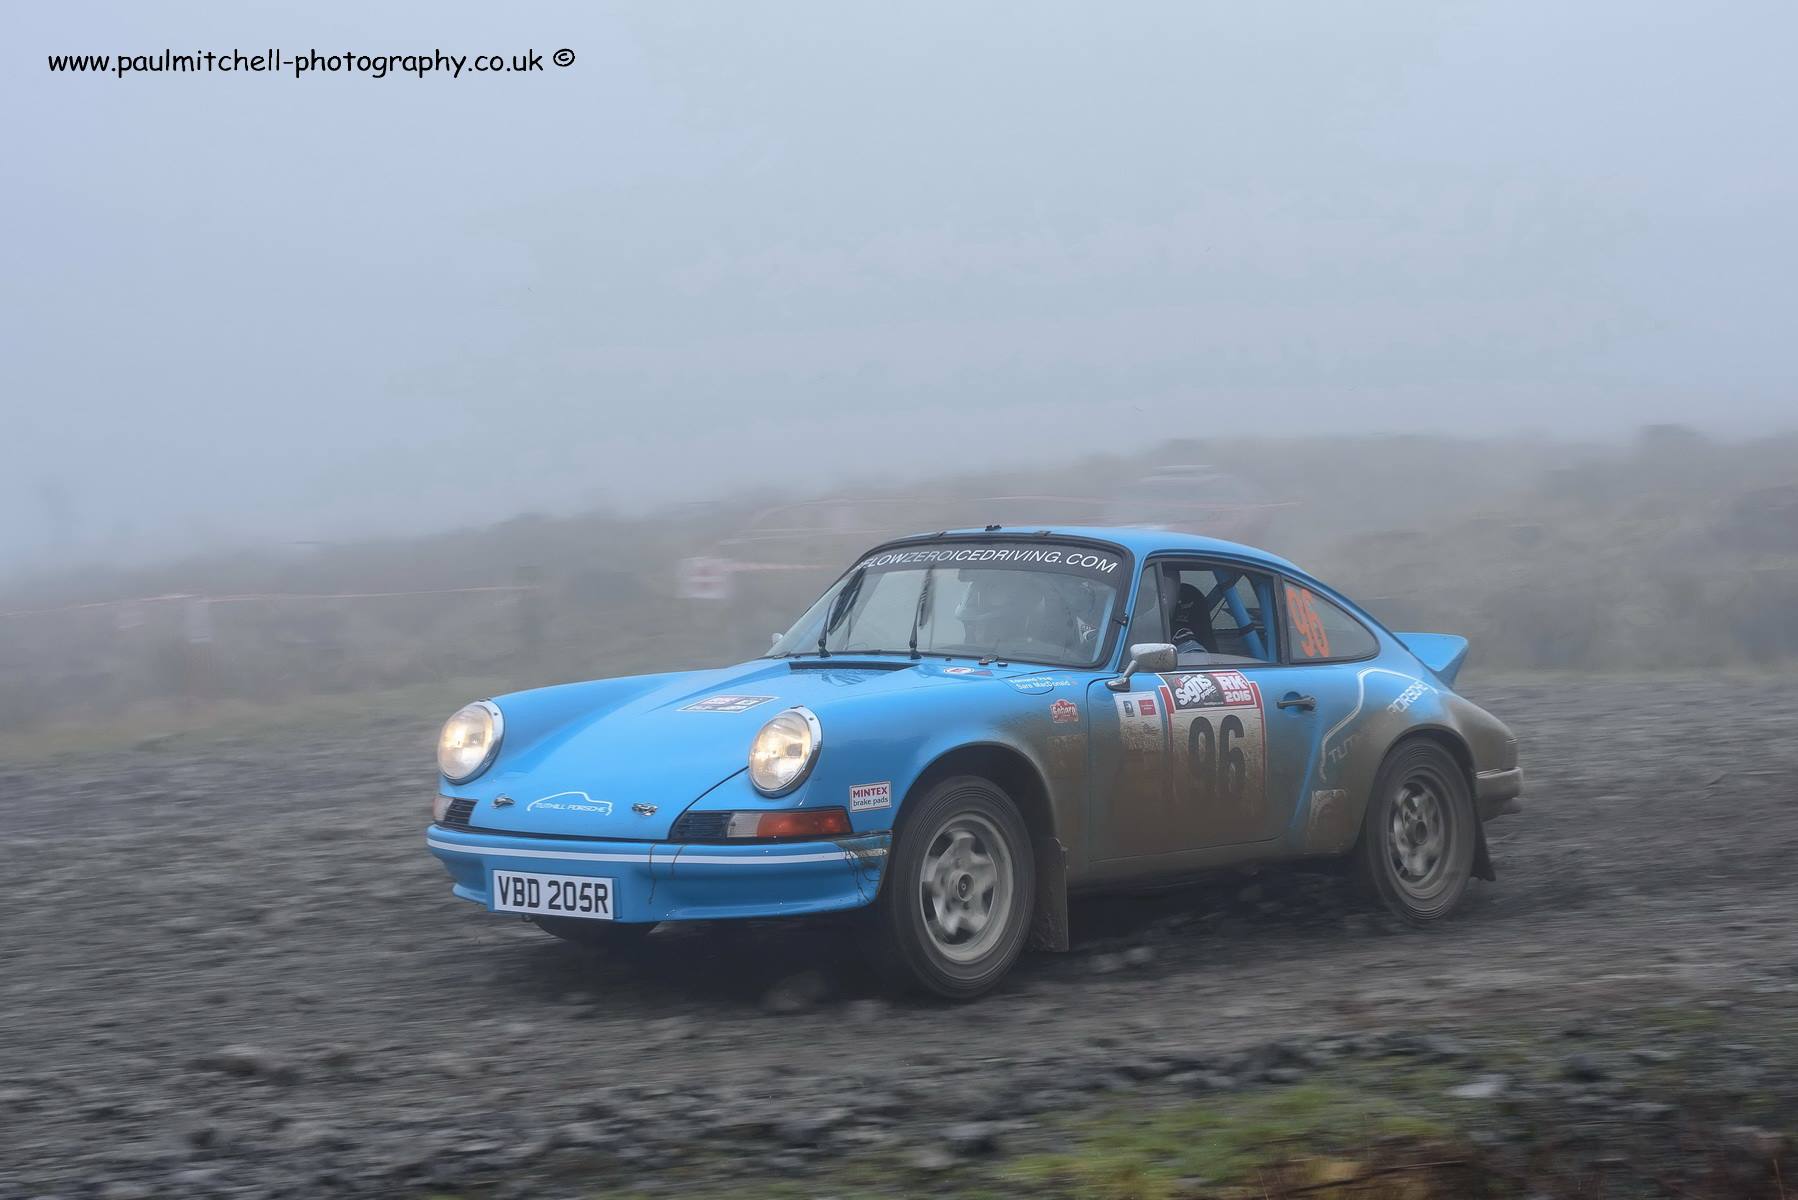 Tuthill Porsche 911s start 2016 rally season